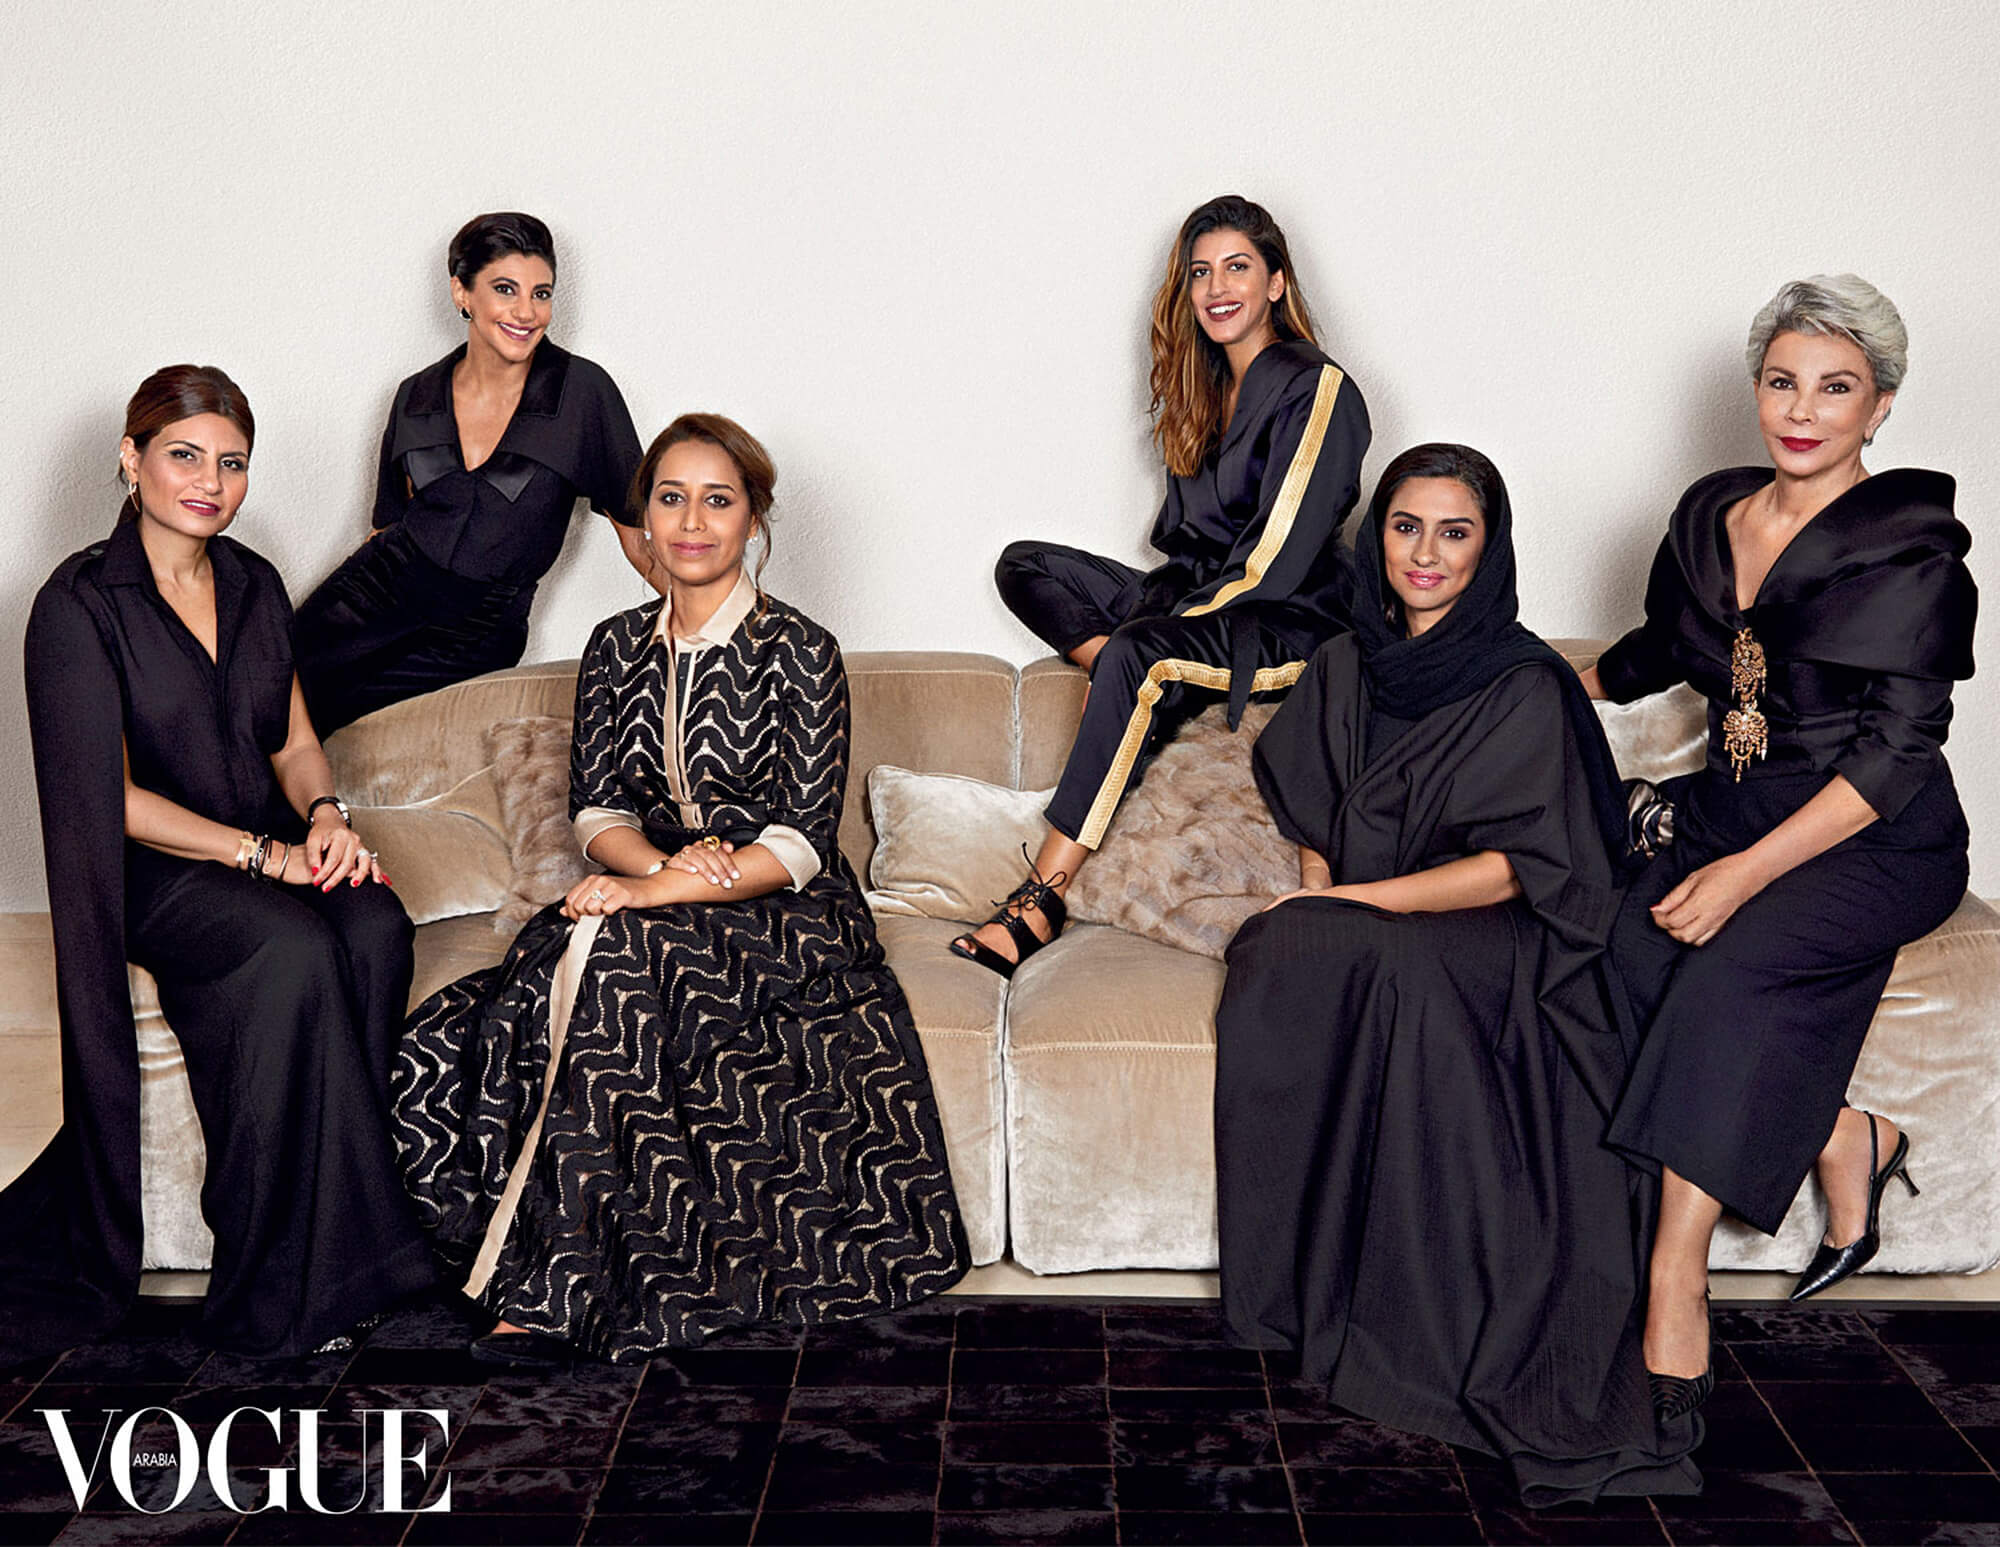 avenger-photographer-dirk-bader-fashion-women-vogue-saudi-designers-1.jpg